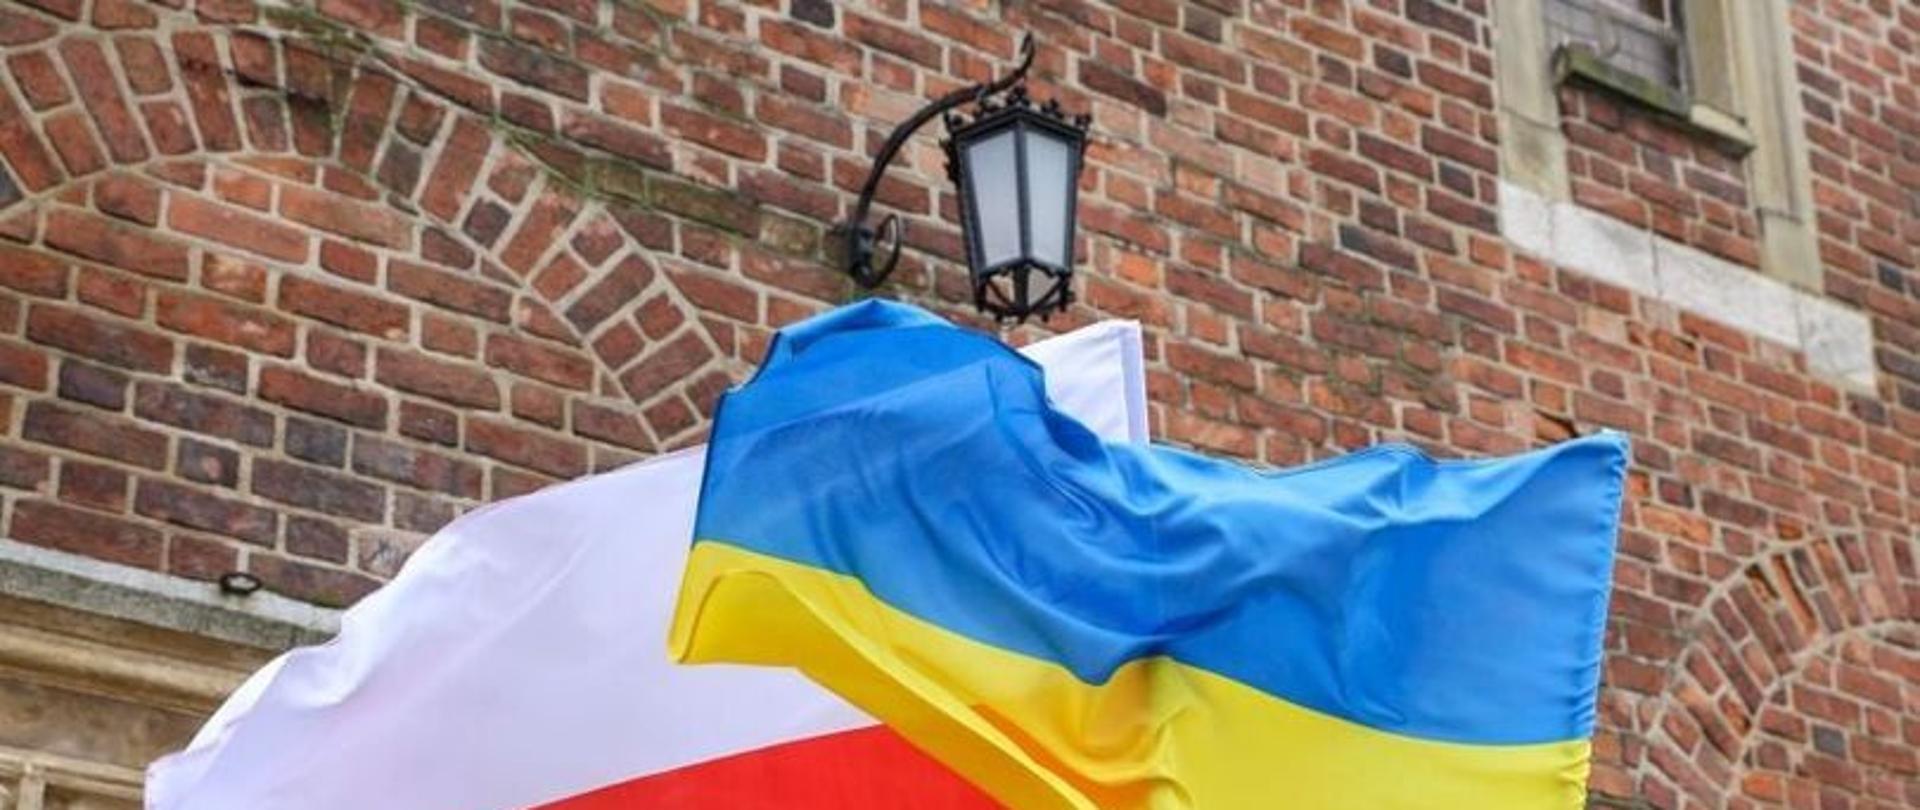 Flaga Polski i Ukrainy na tle budynku